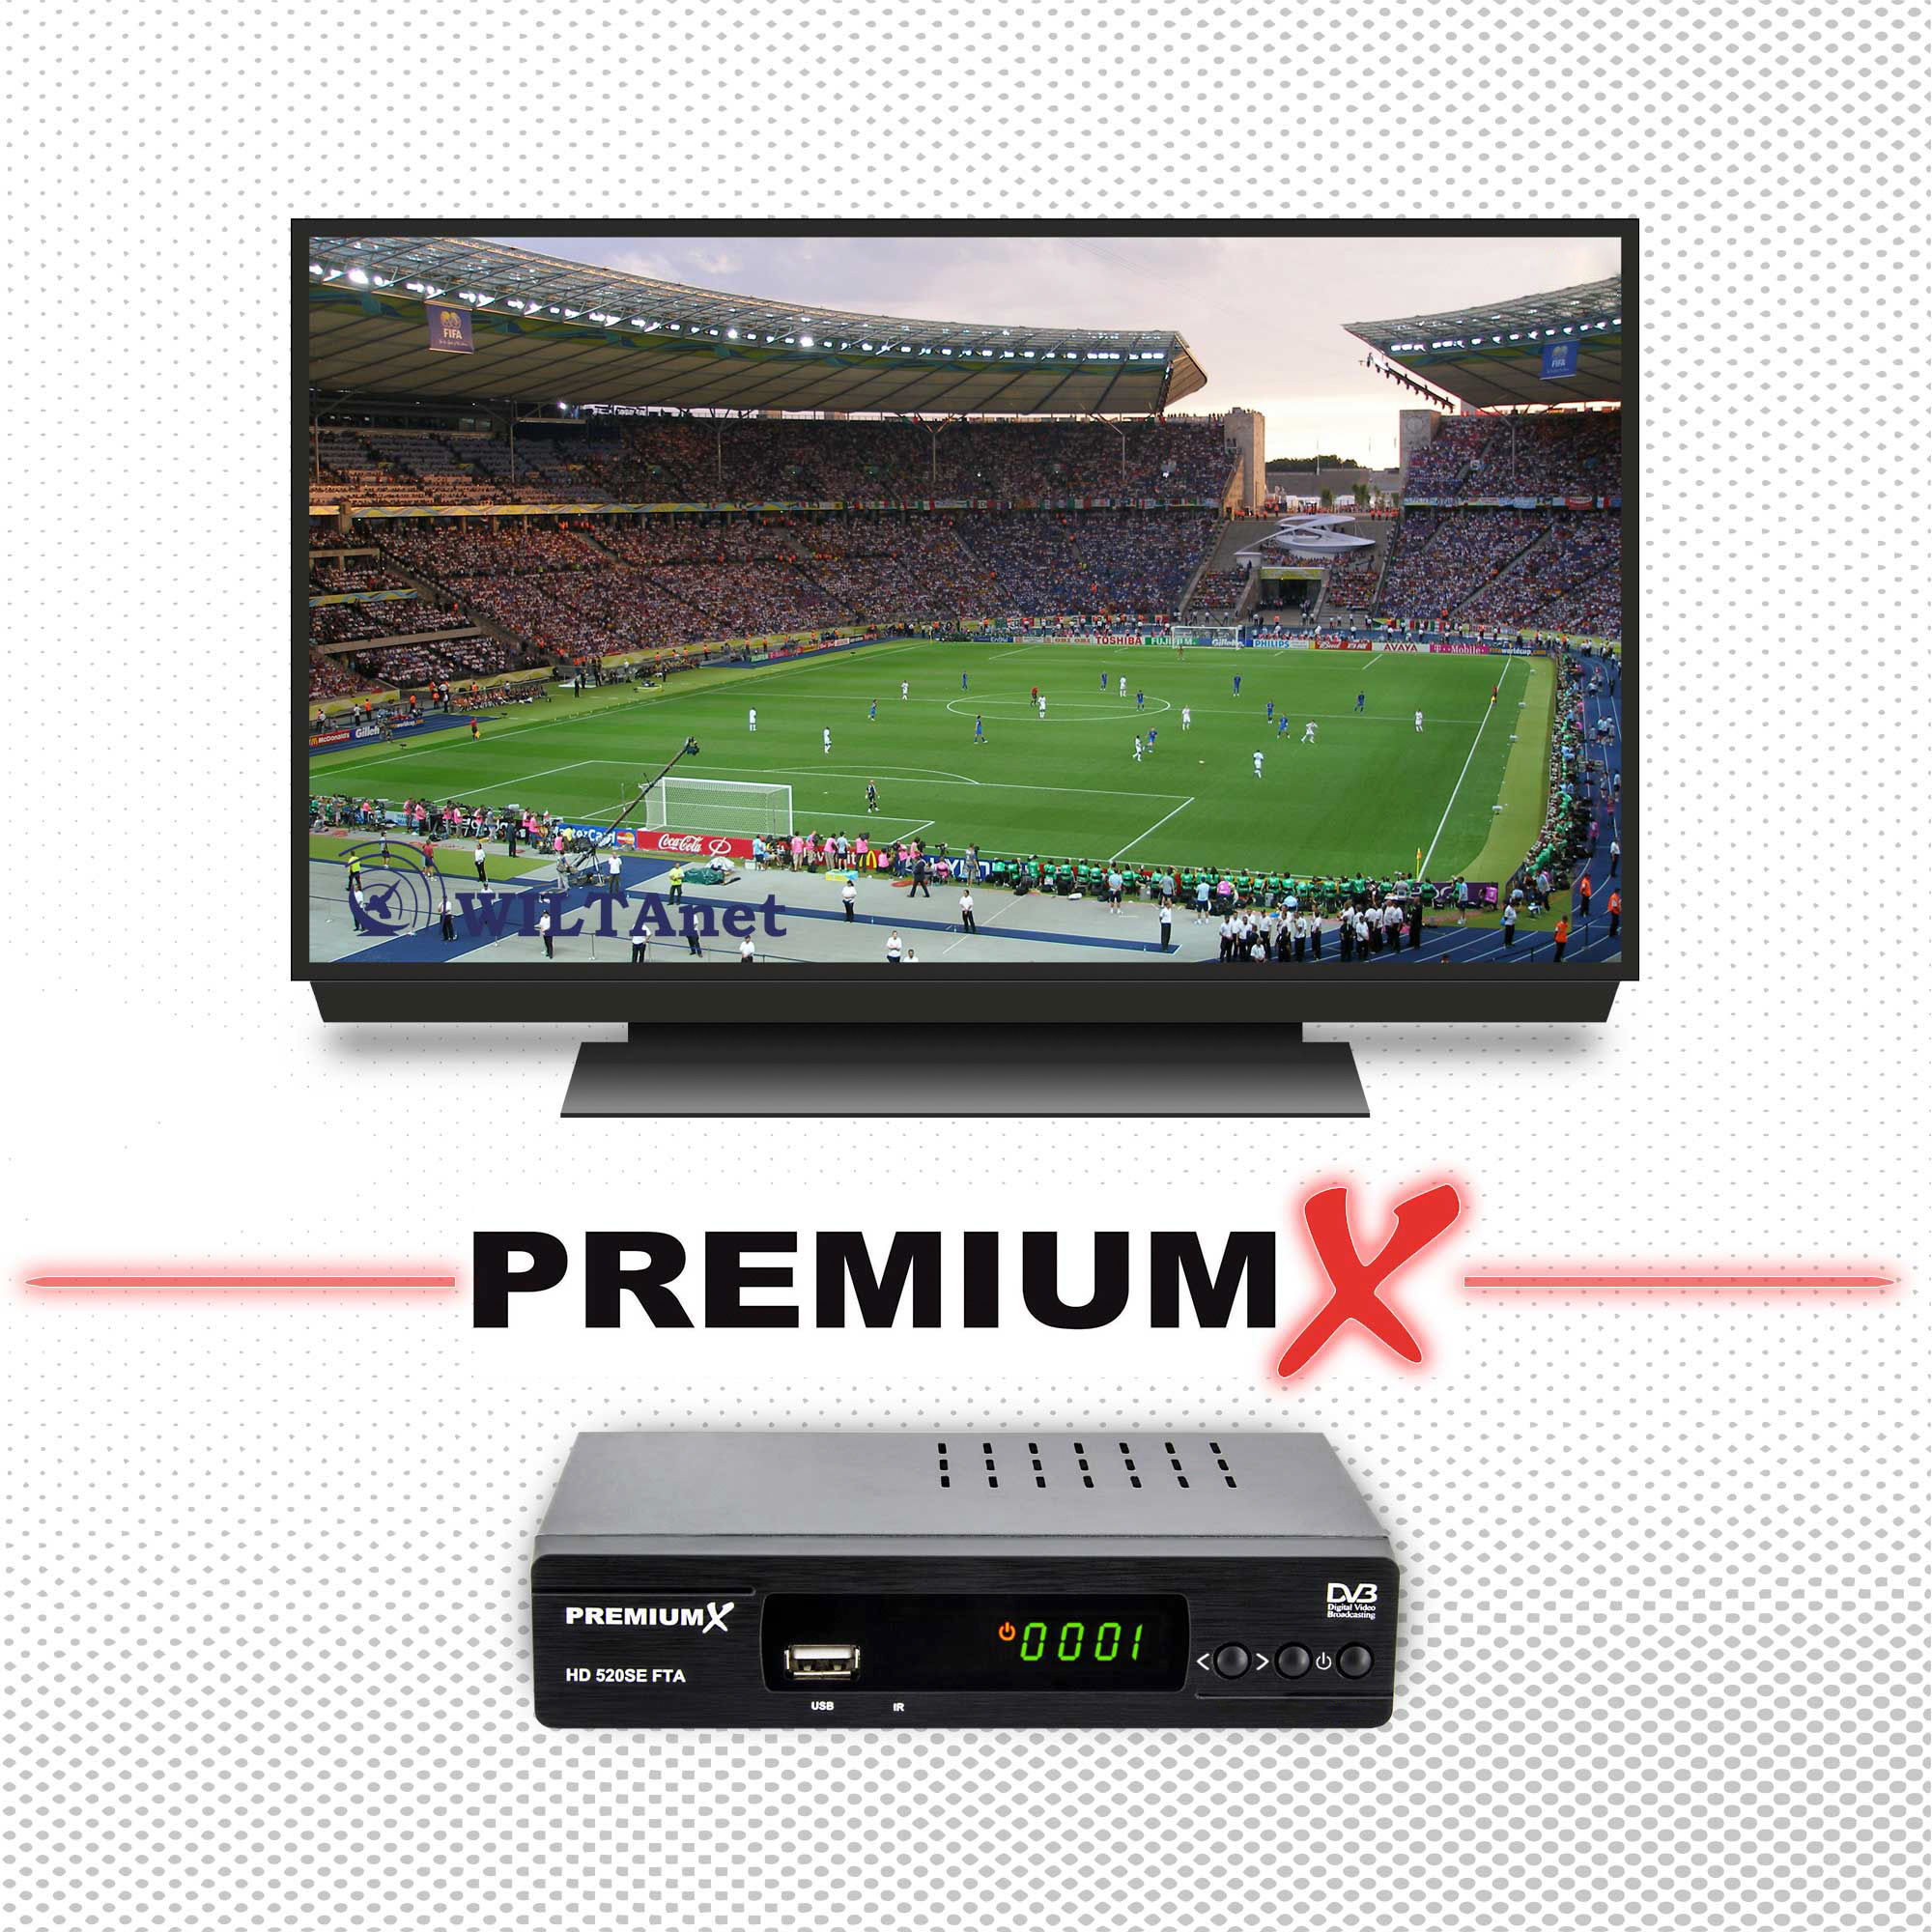 DVB-S2 FullHD Sat SCART Digital HD USB 520SE HDMI Receiver (Schwarz) PREMIUMX HD Receiver FTA SAT